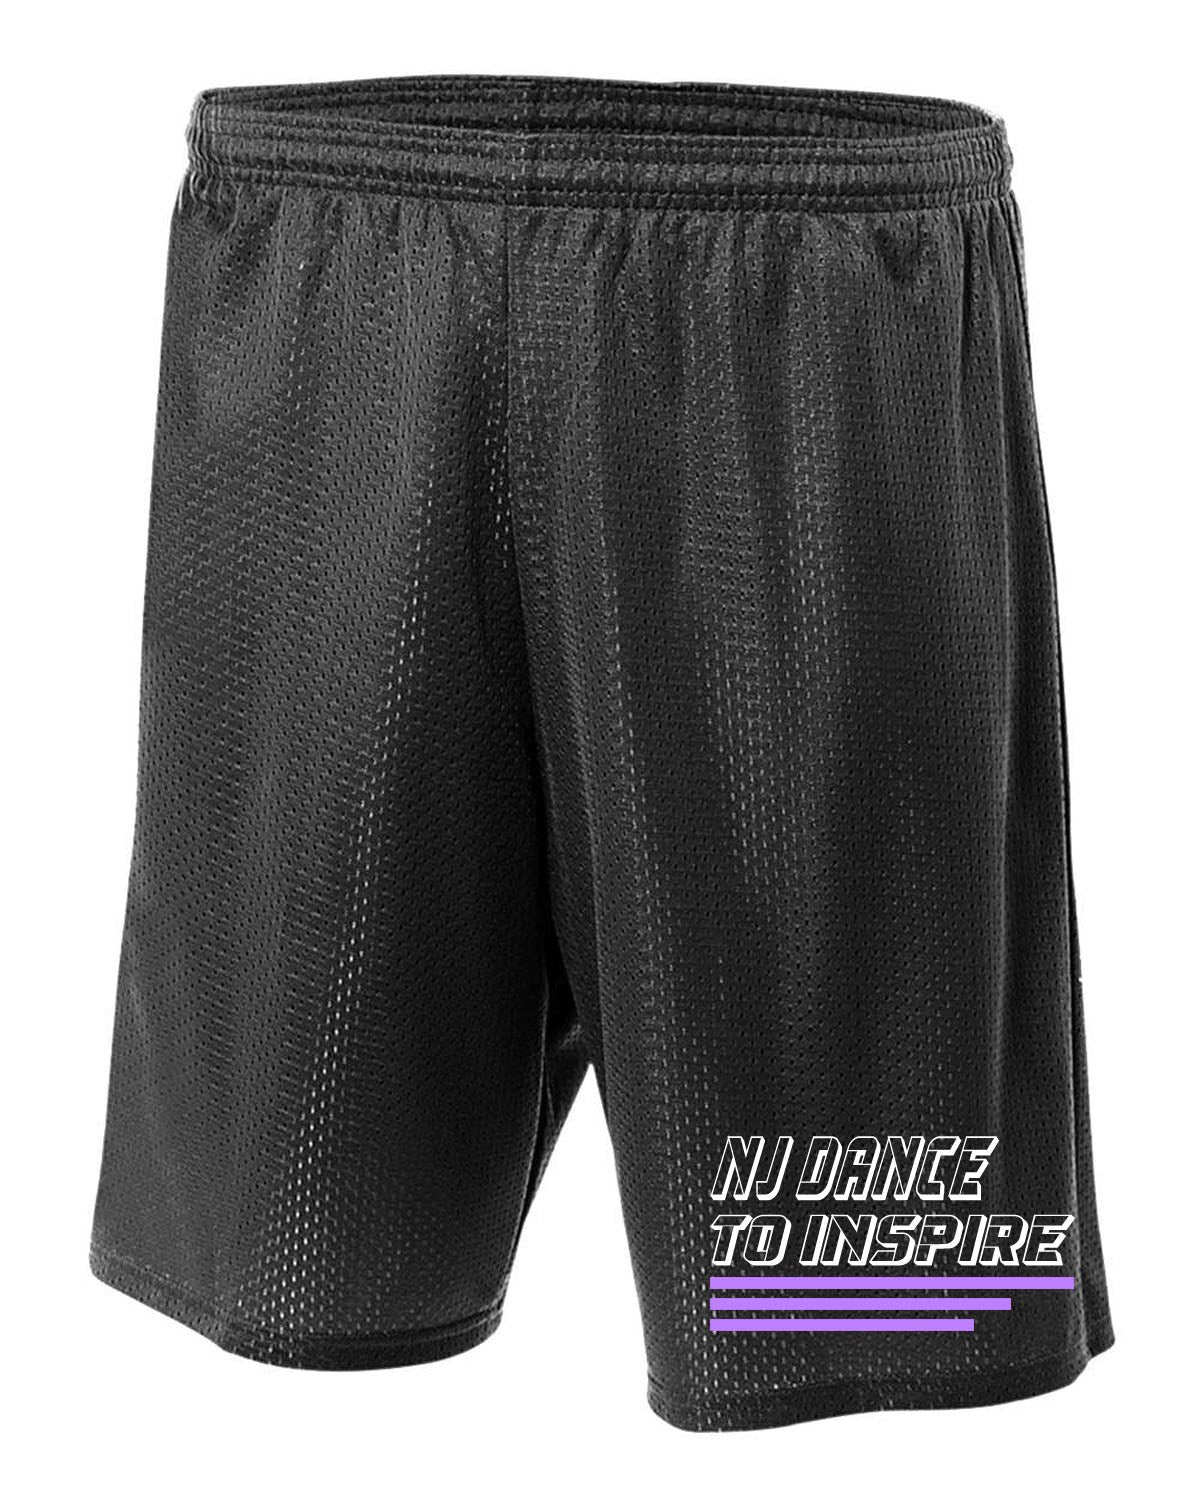 NJ Dance Mesh Shorts Design 13